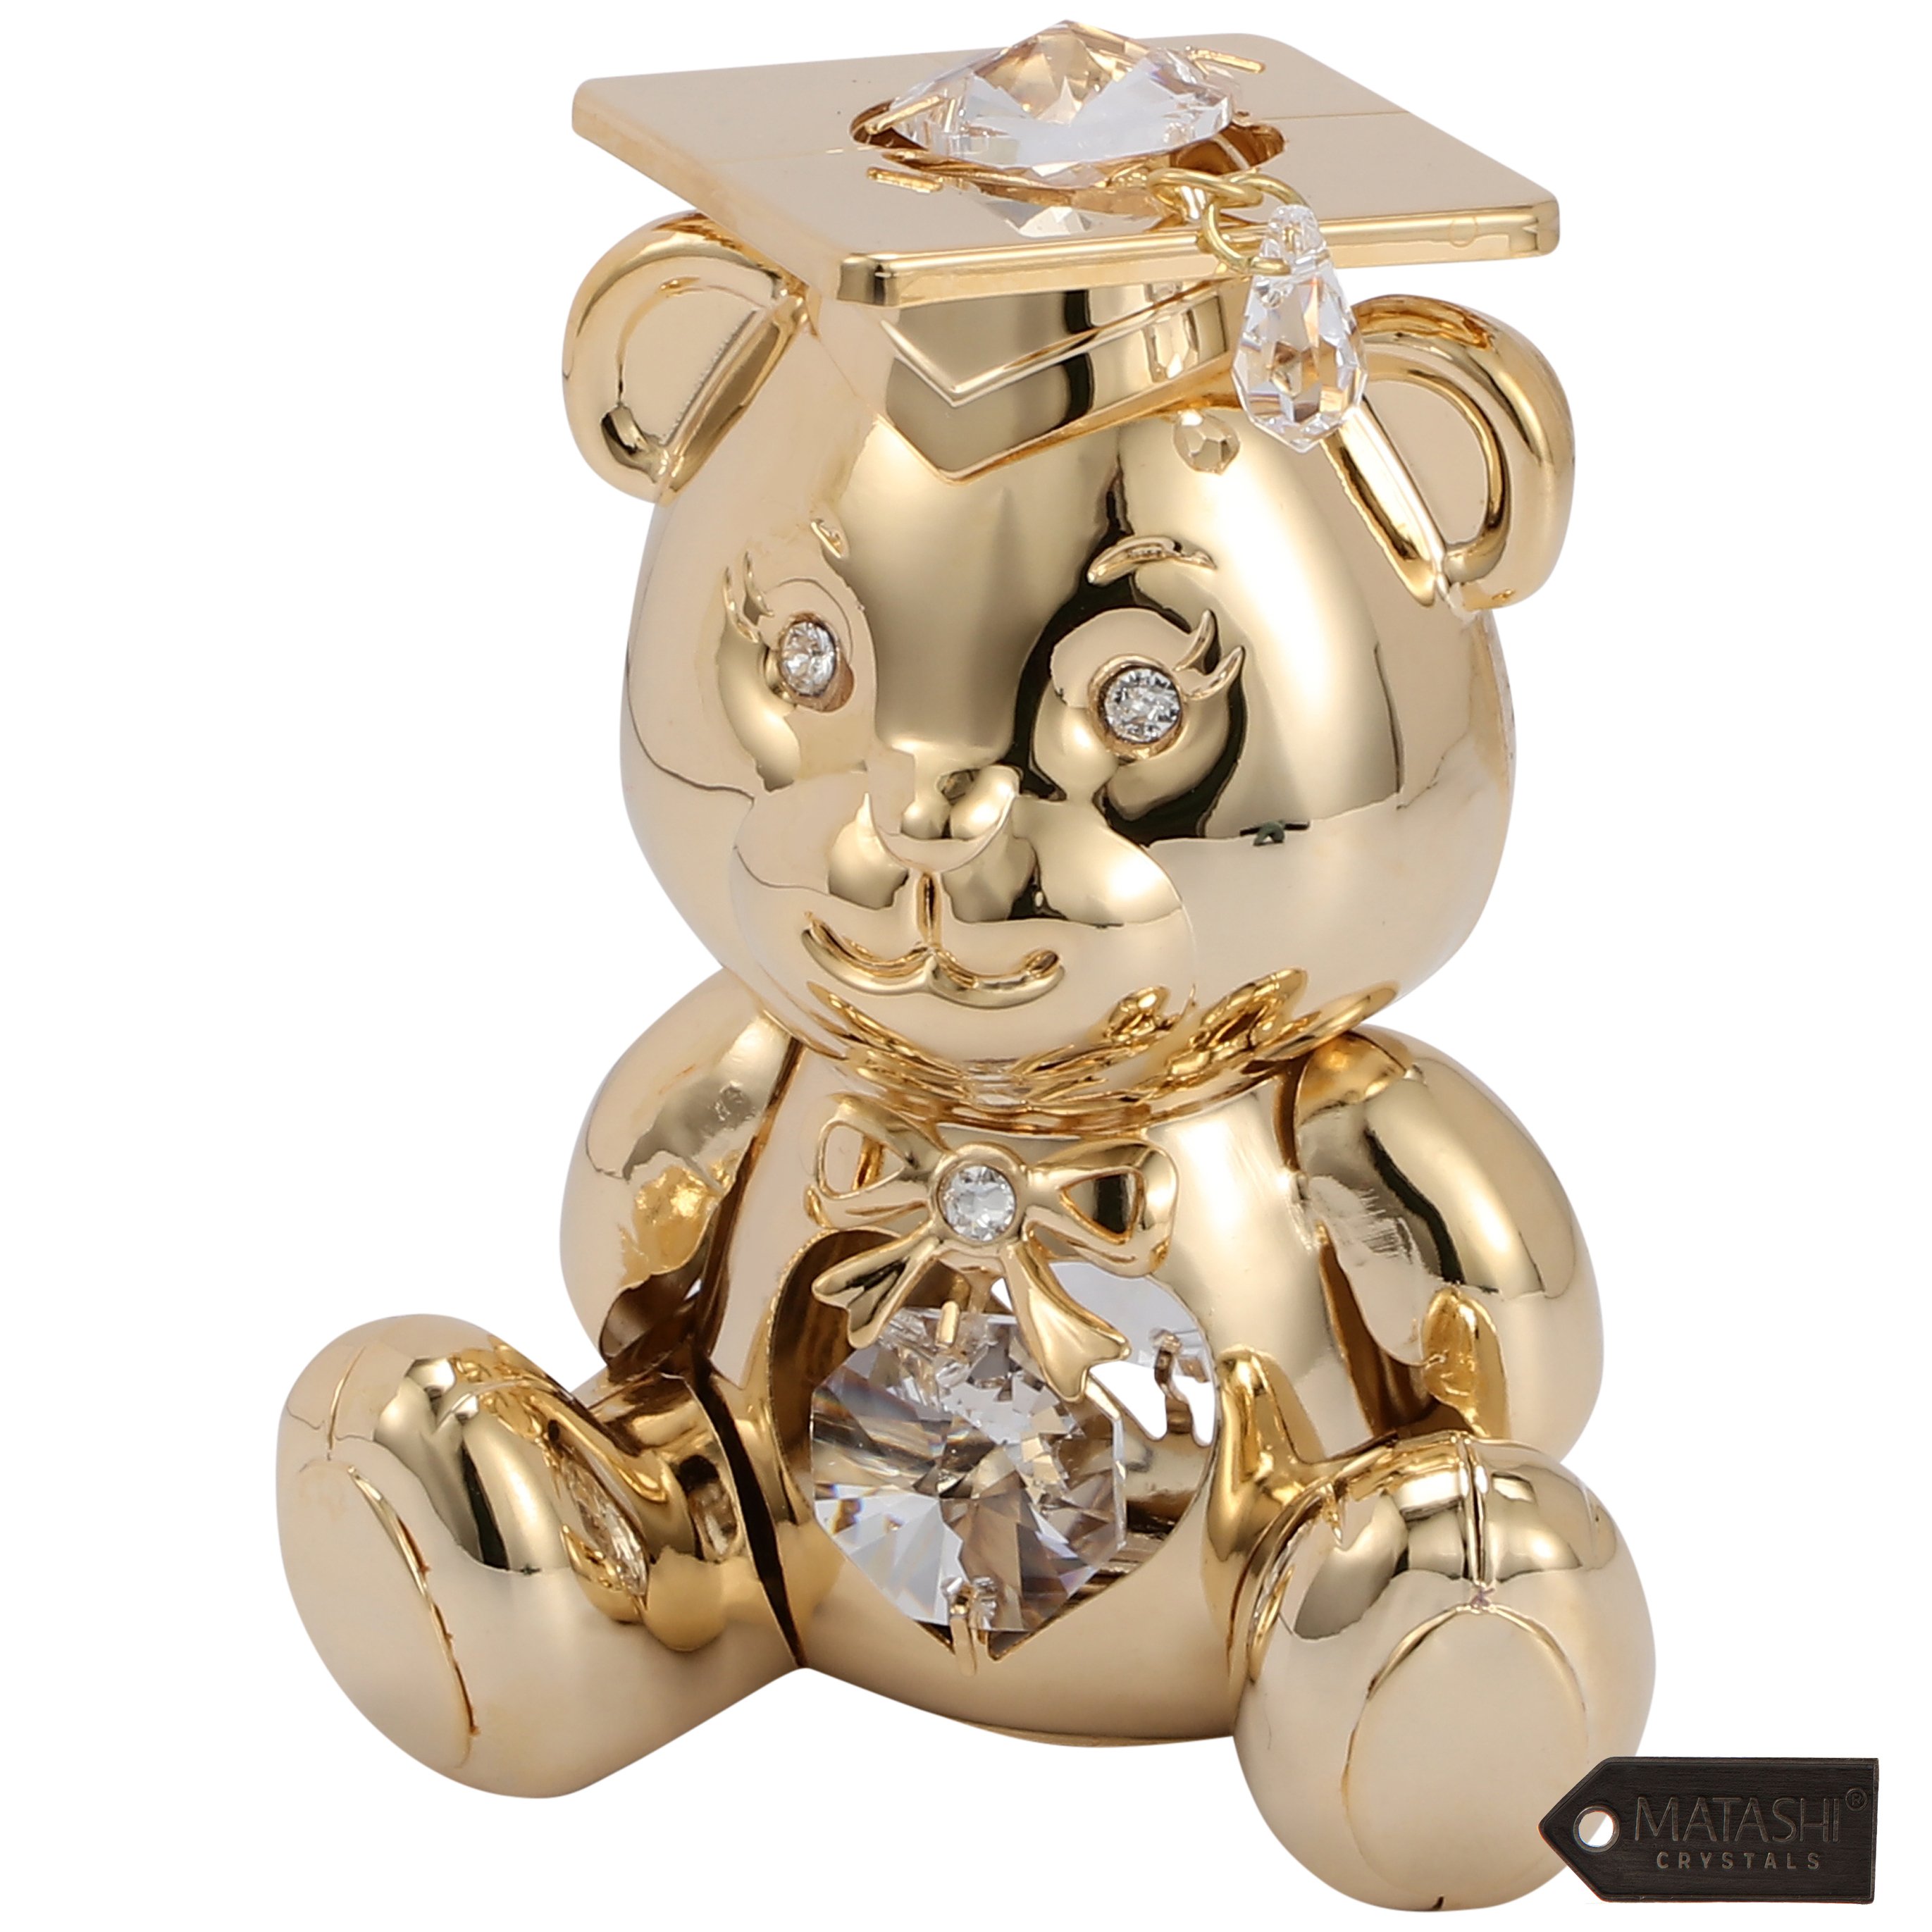 Matashi 24K Gold Plated Graduation Bear With Matashi Crystals, Gift For Any Occasion